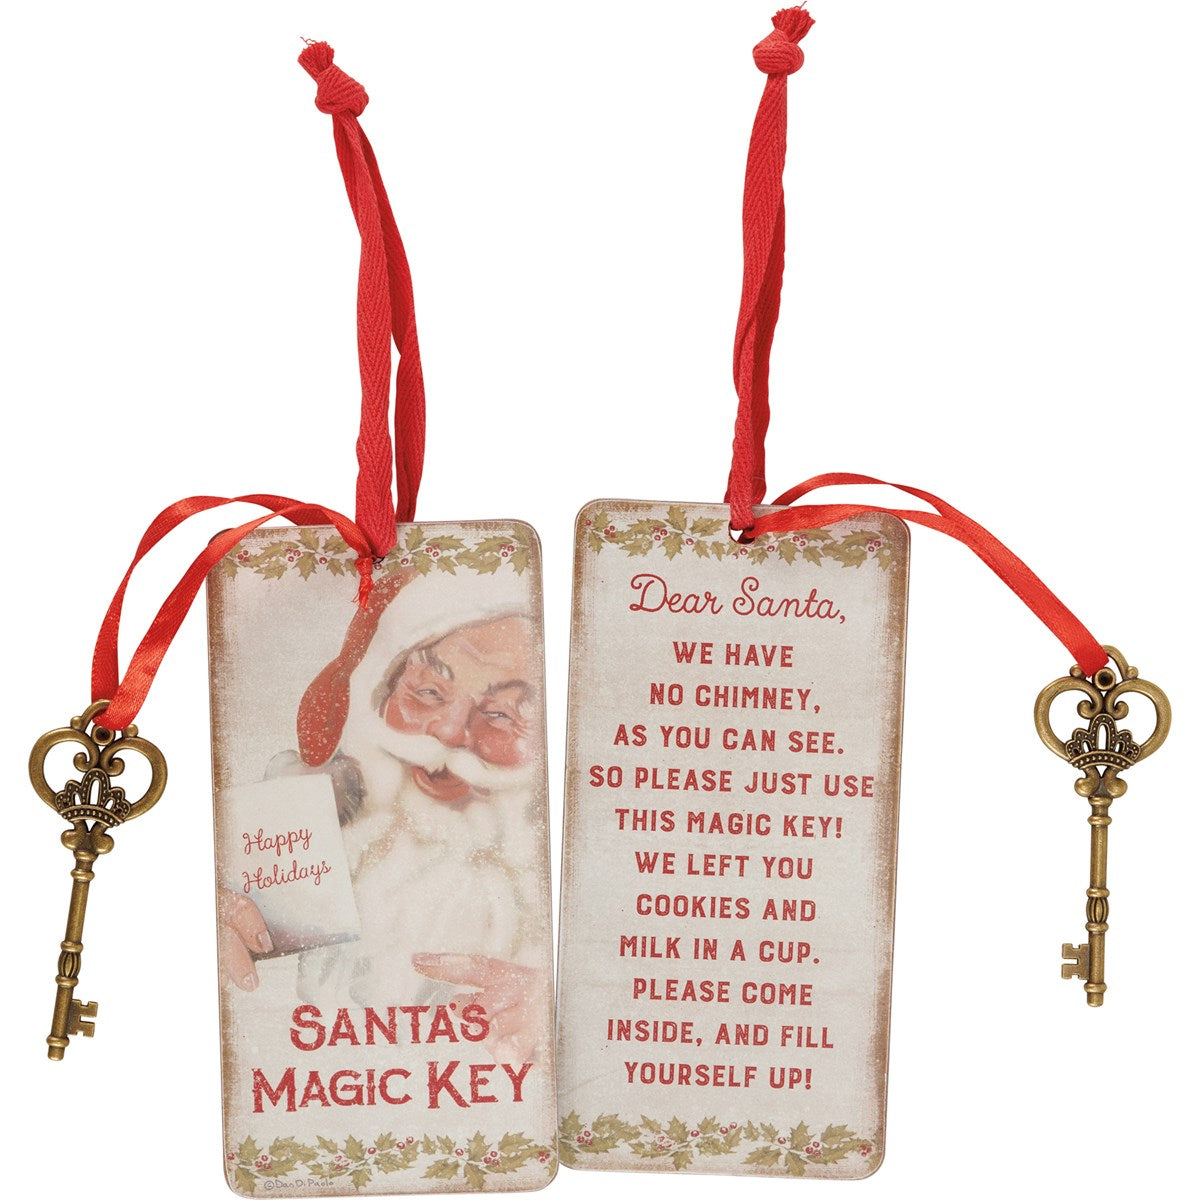 Santa Magic Key no chimney